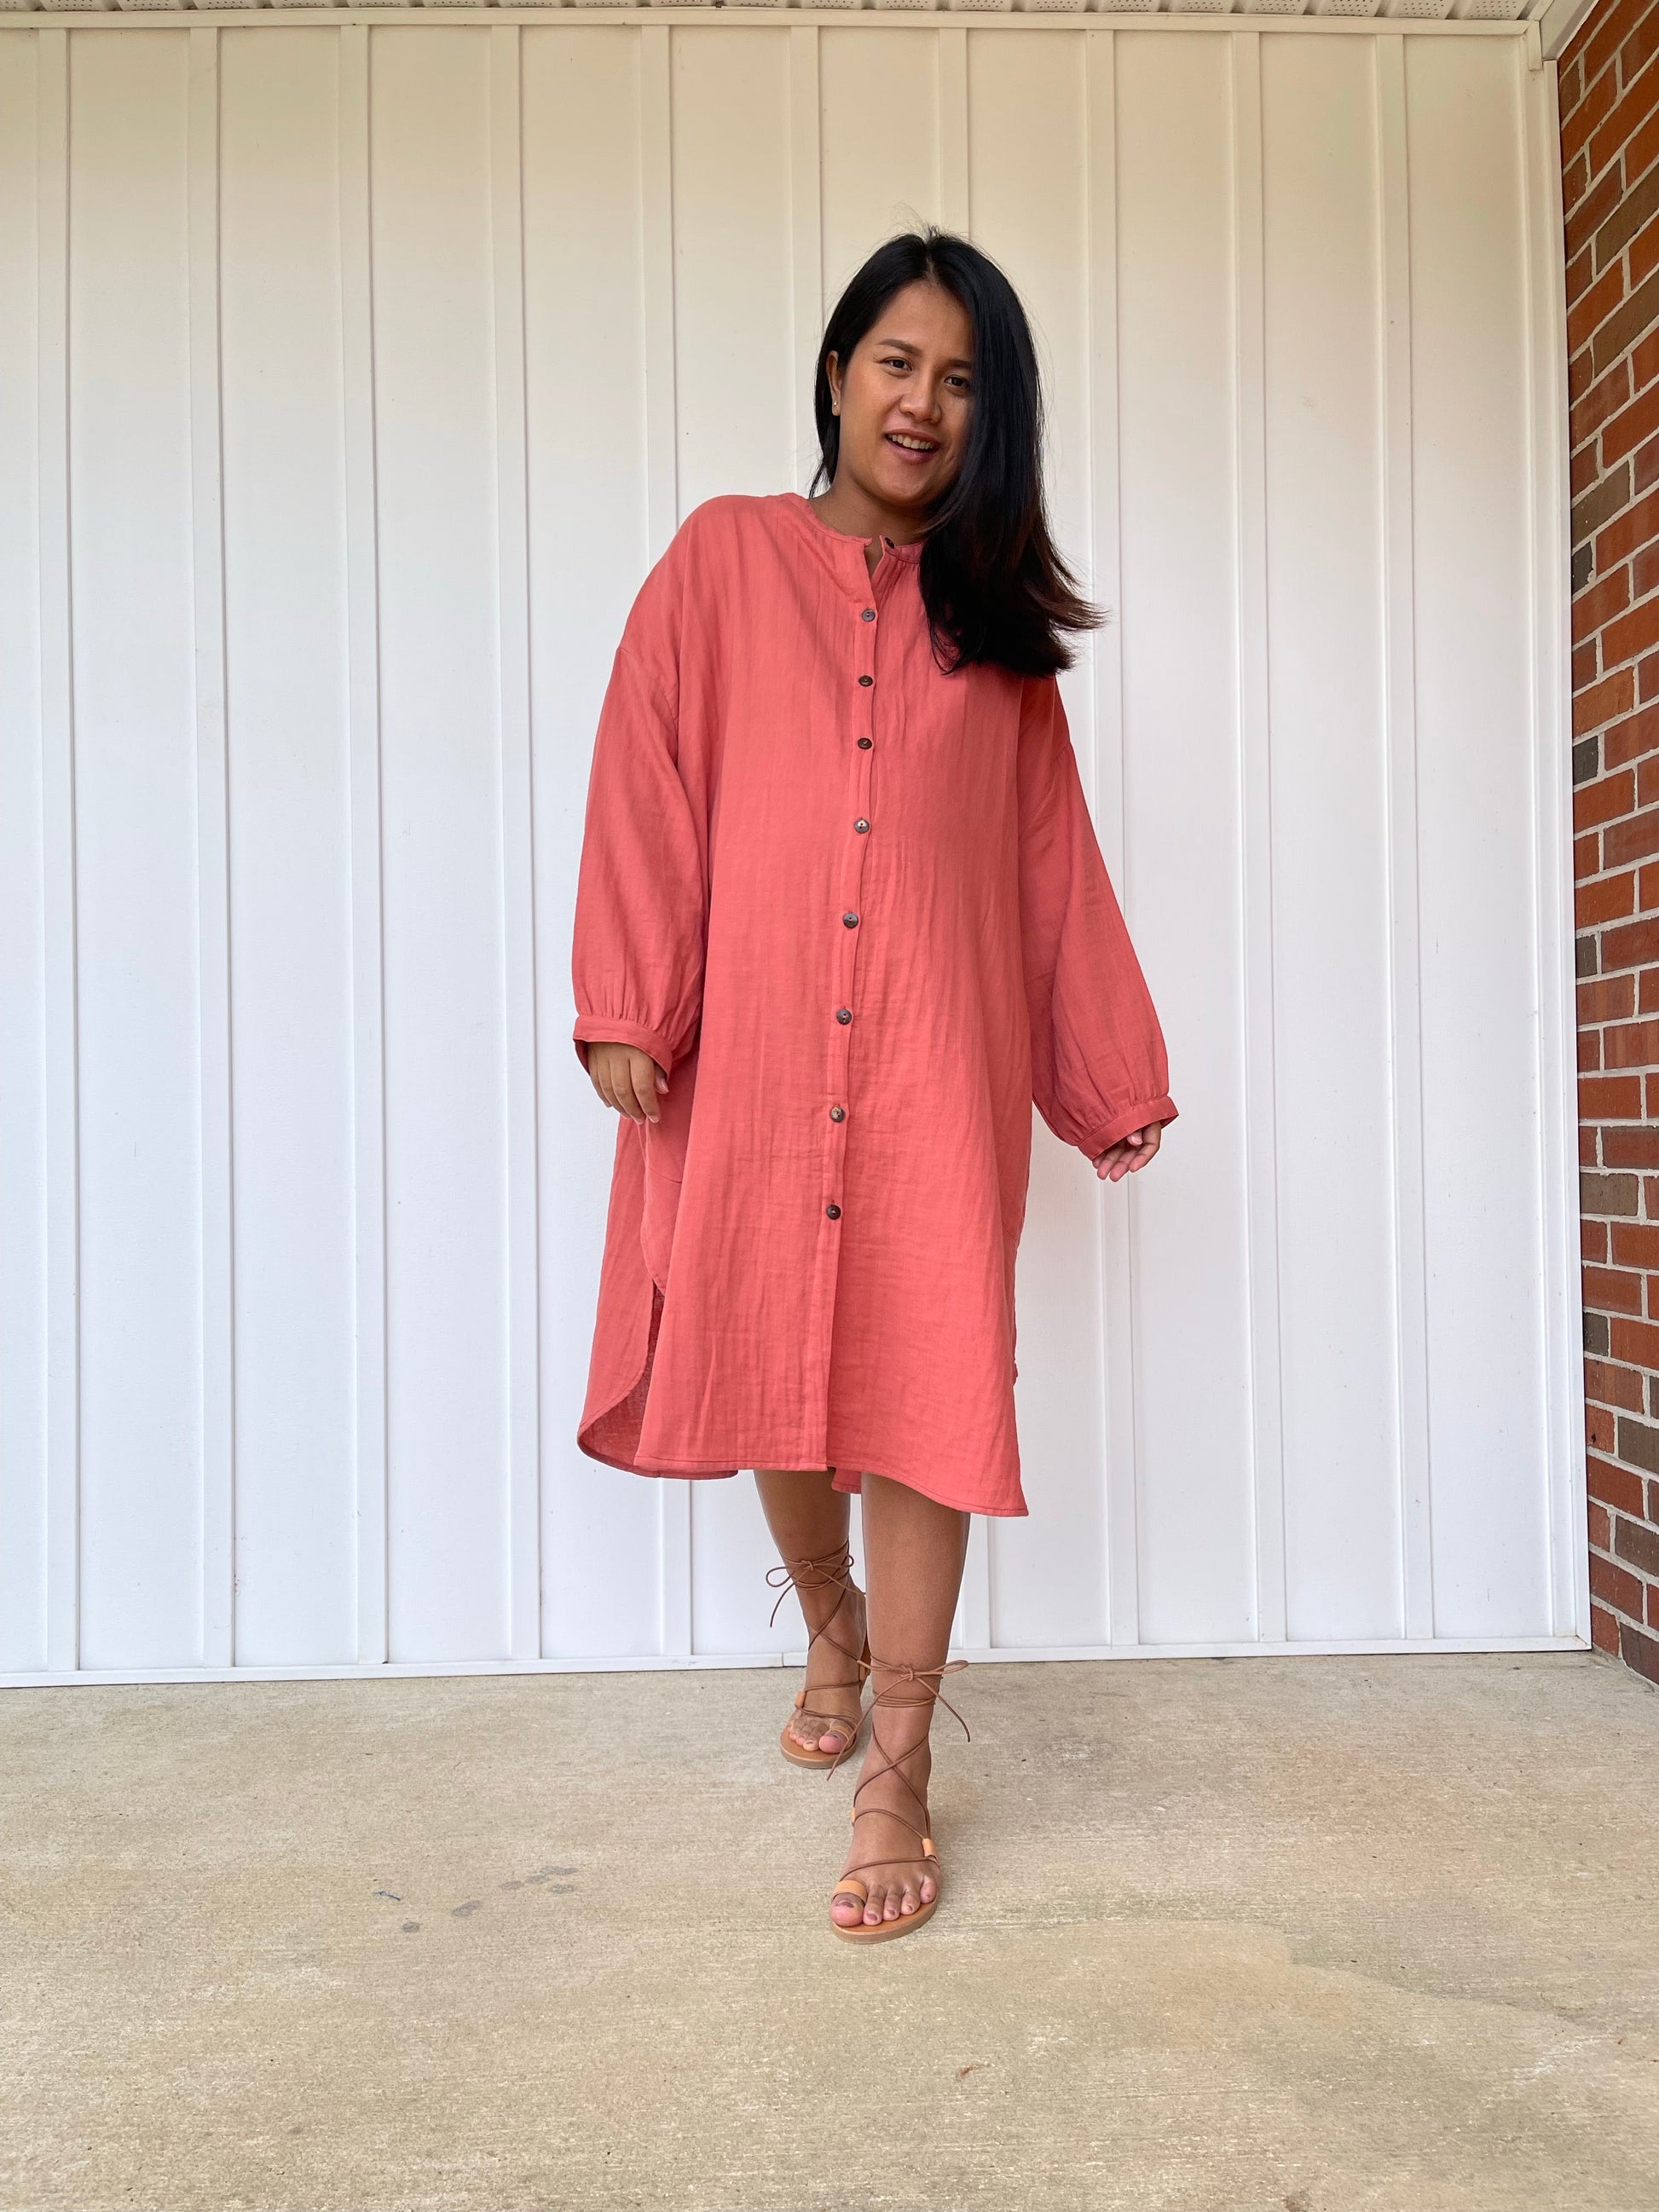 MALA handworks 41 in. Aura Double Gauze Cotton Midi Shirt Dress in Salmon Pink